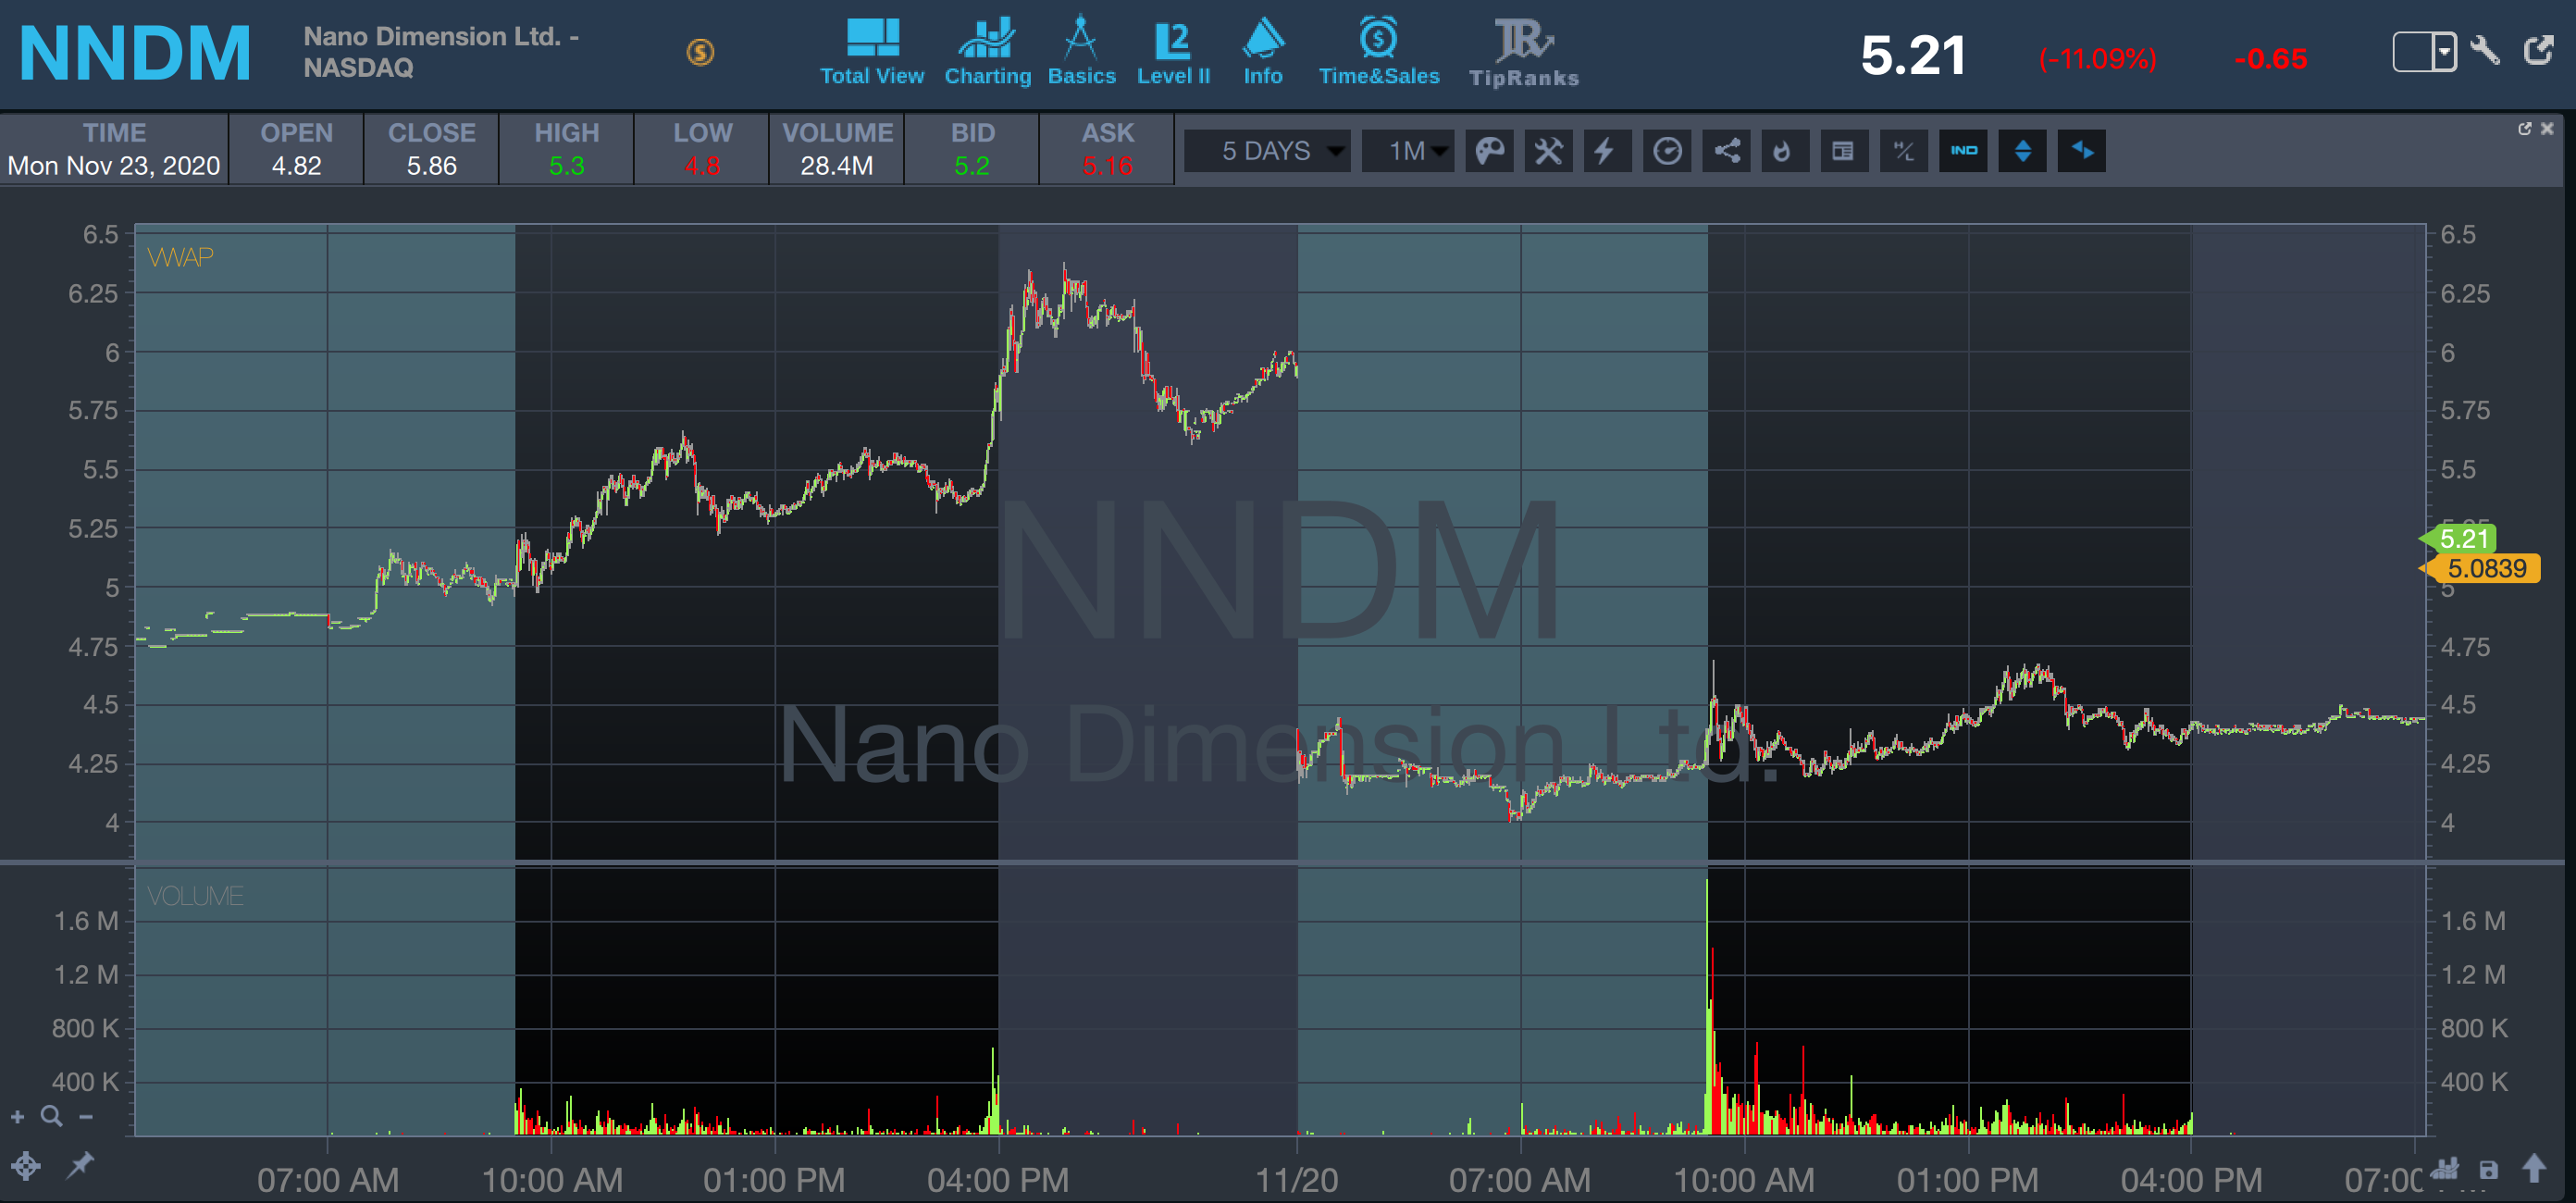 diluted shares nndm